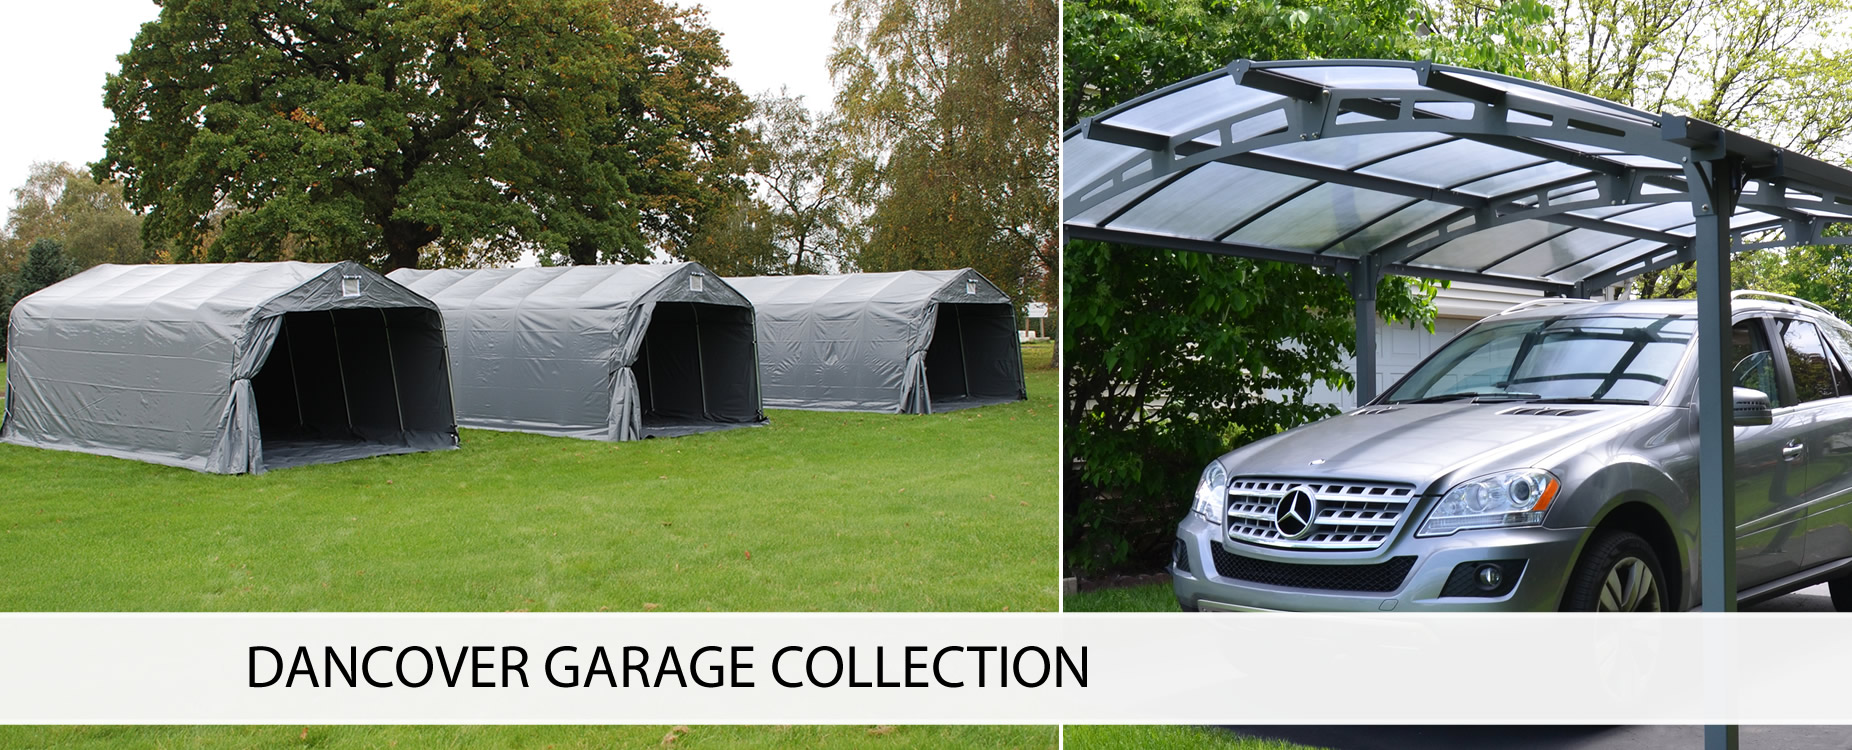 Portable garages, garage tents, folding garages, carports etc.